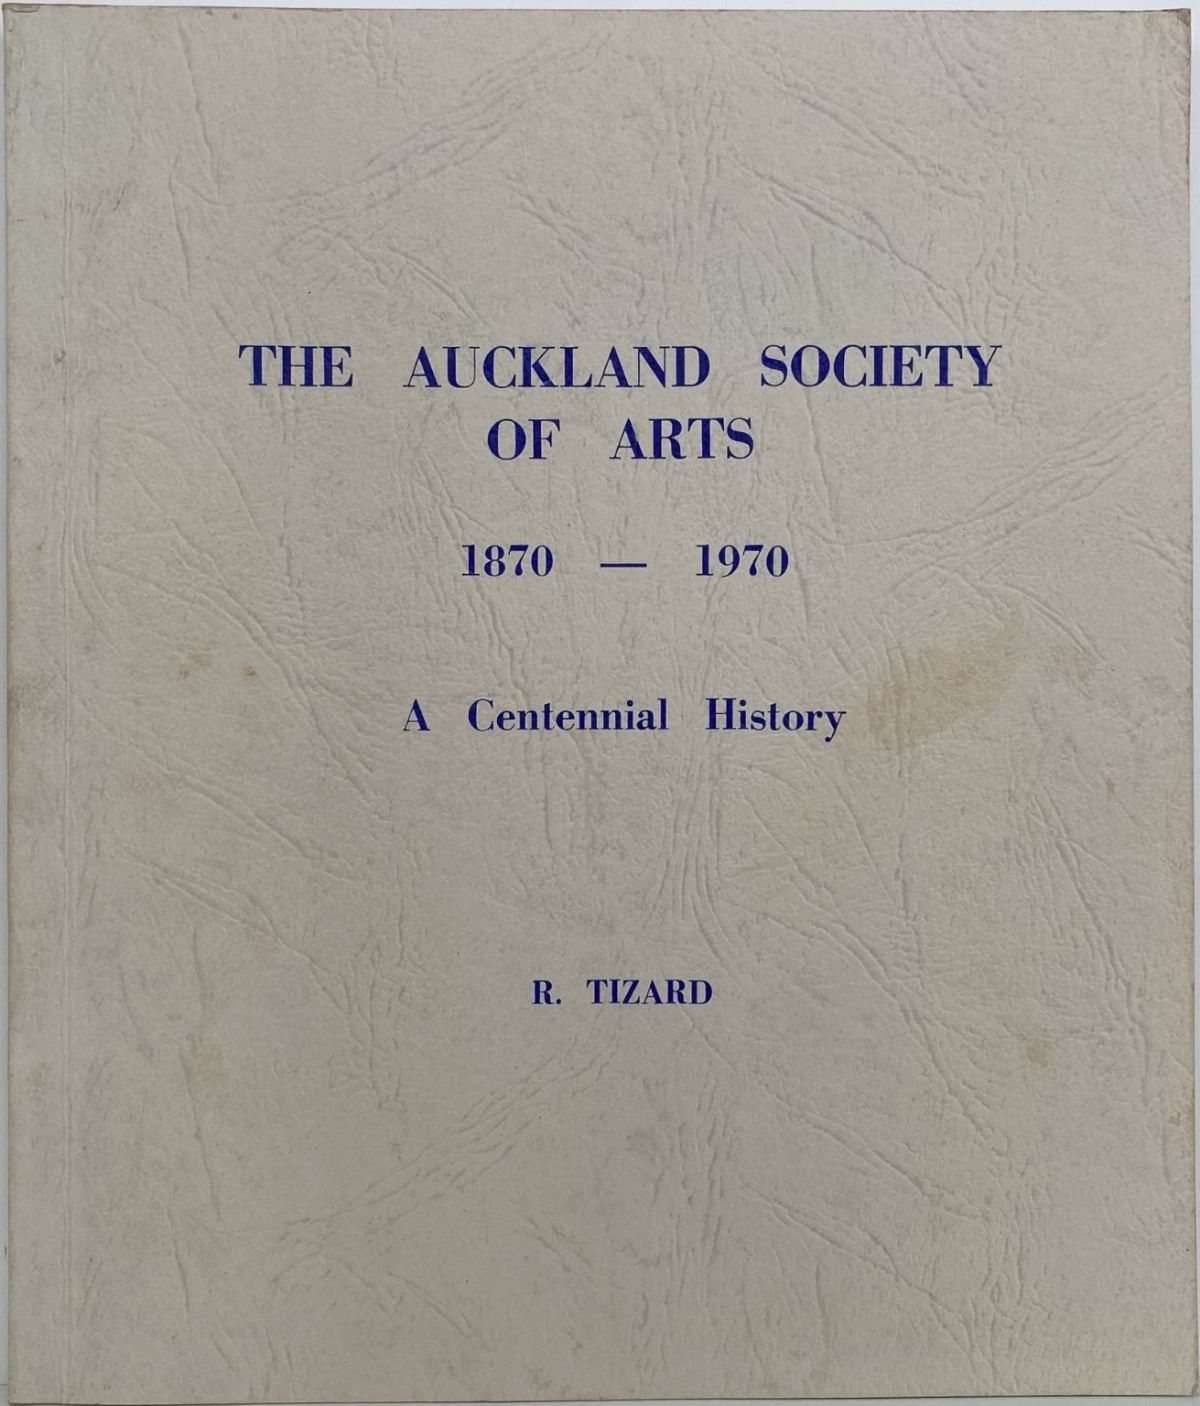 THE AUCKLAND SOCIETY OF ARTS 1870 - 1970 A Centennial History